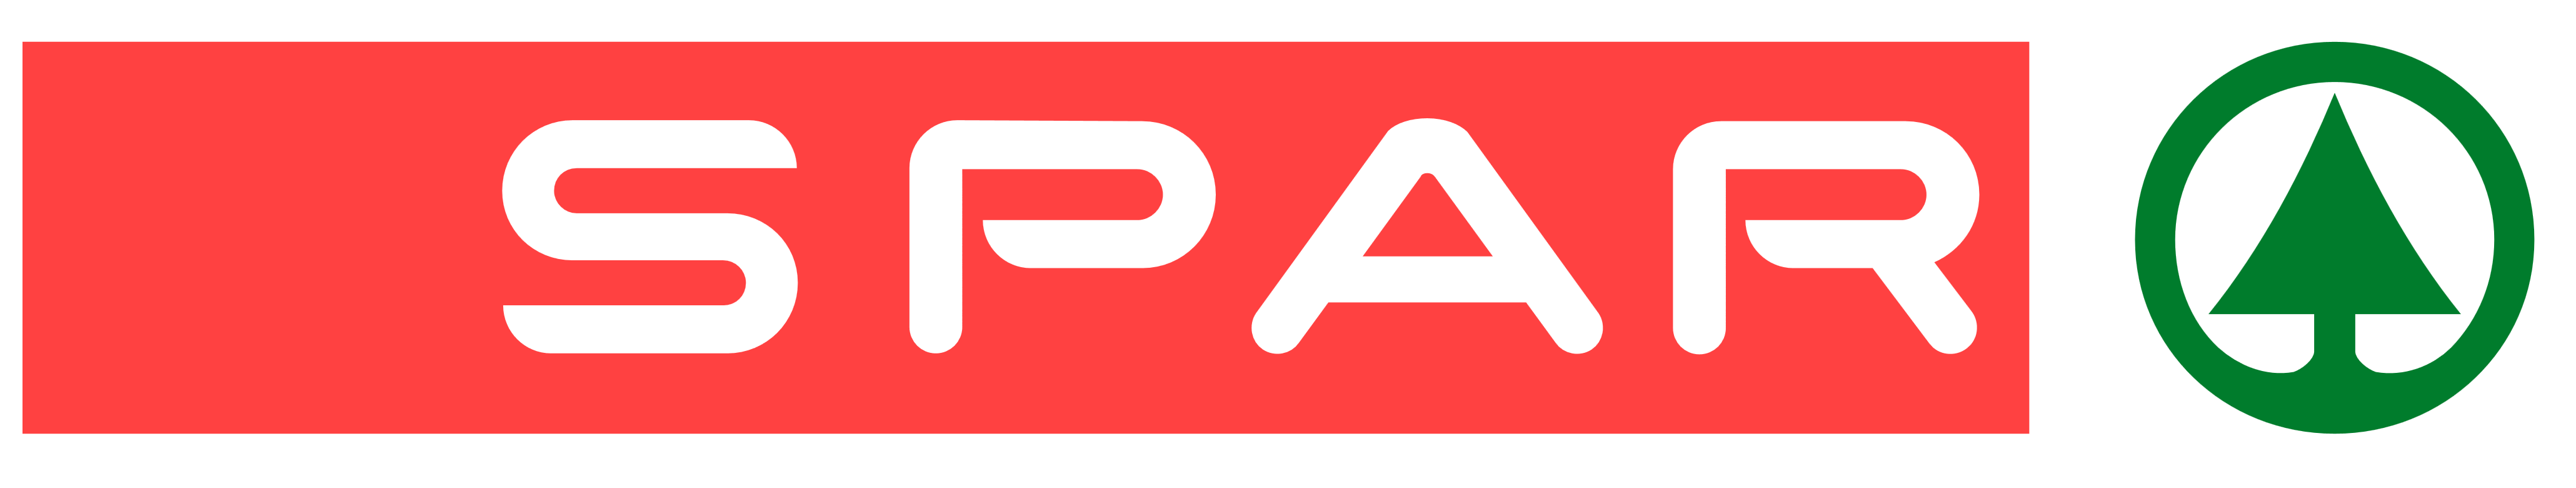 Spar logo, logotype